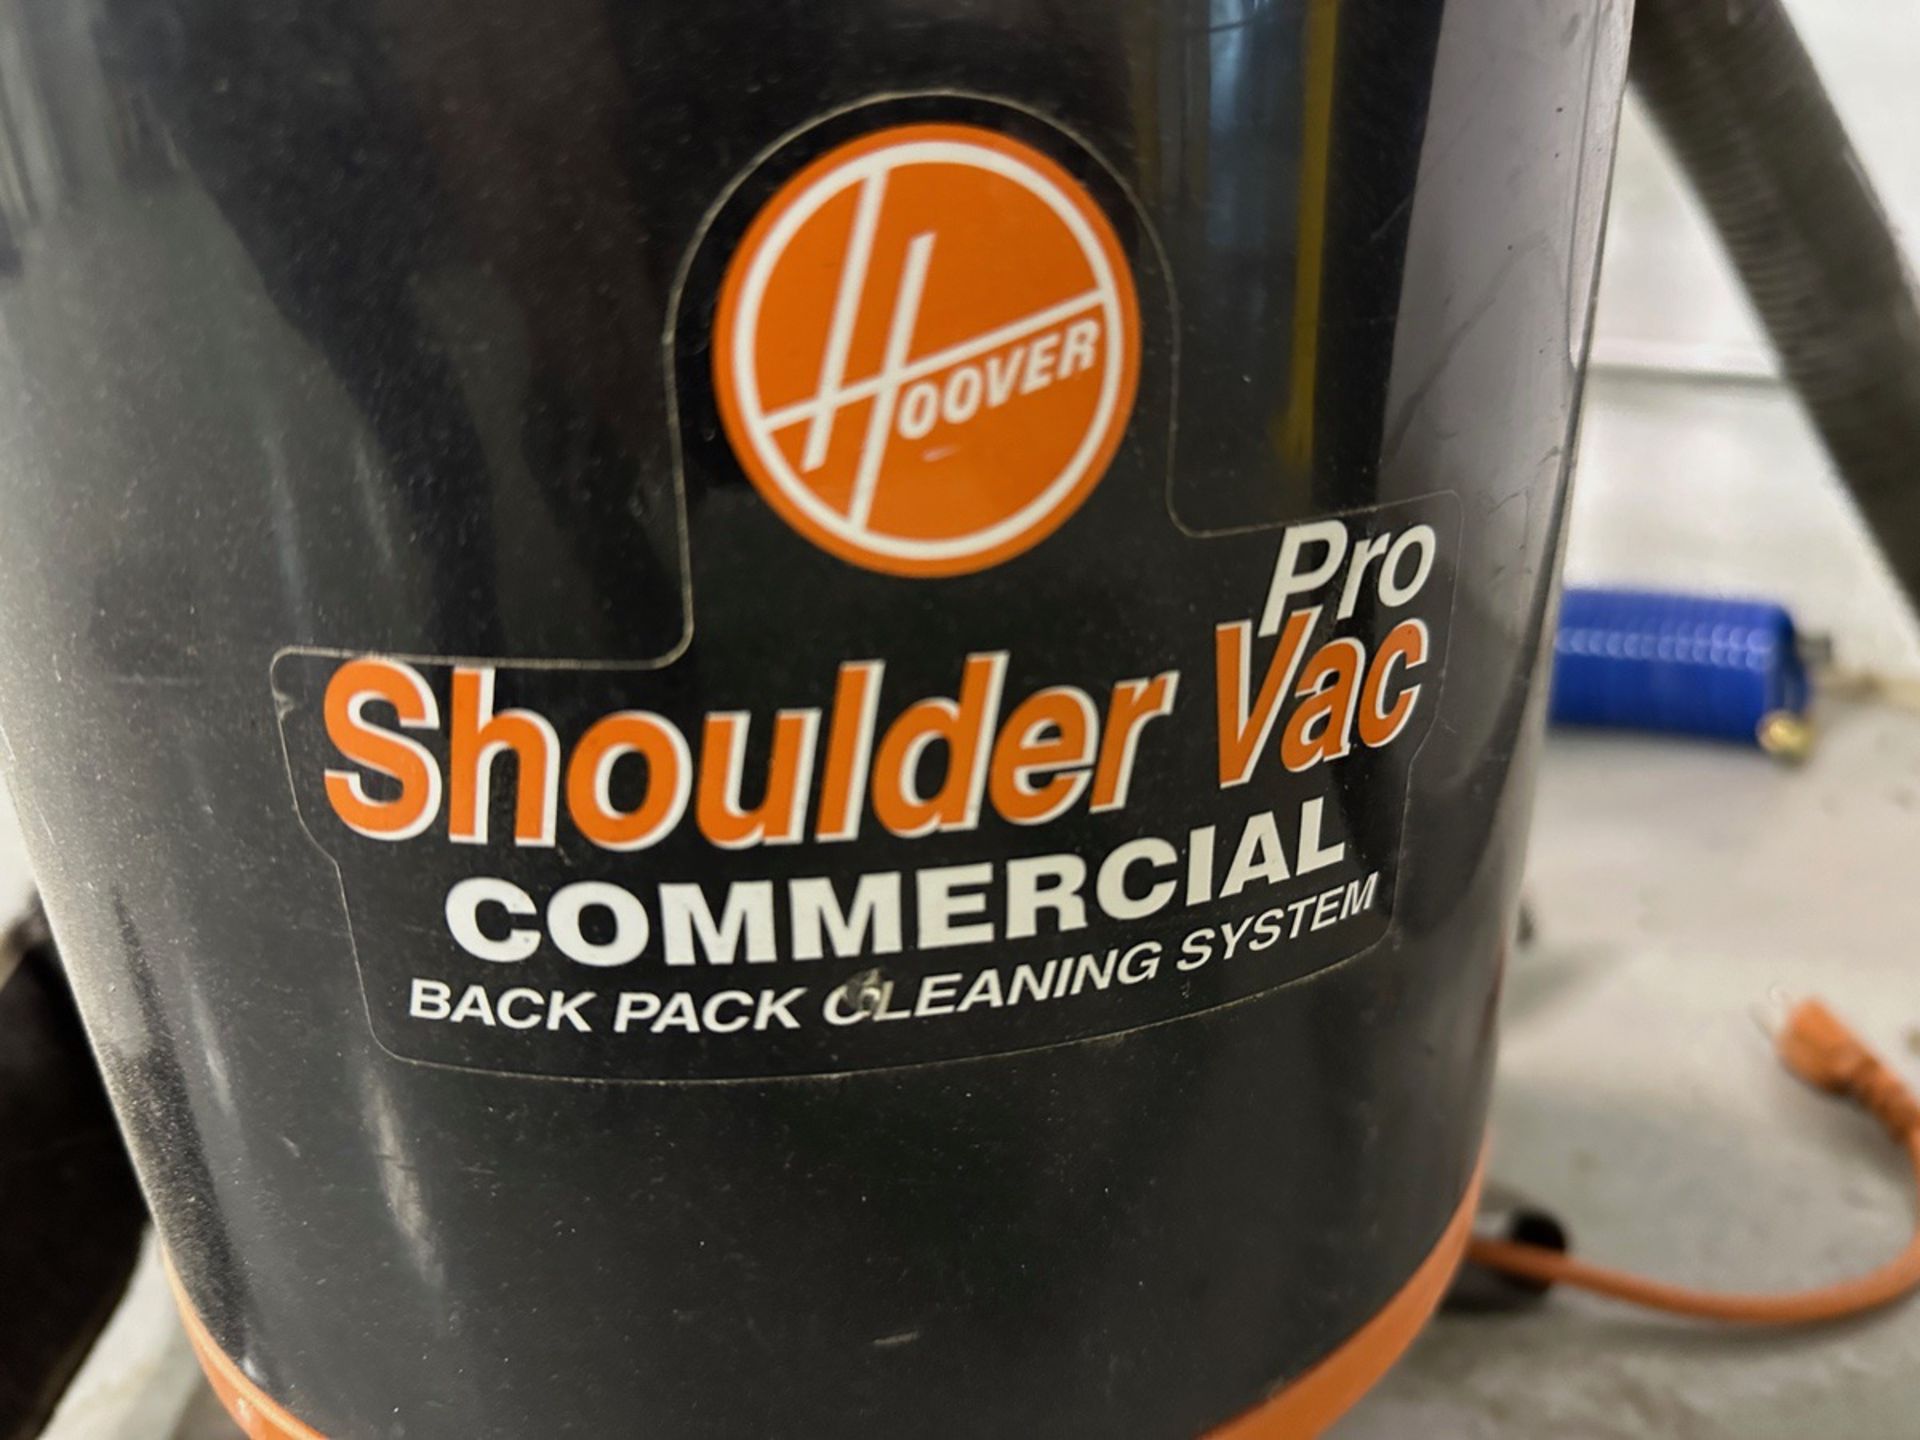 Hoover Shoulder Vac Pro Commercial Vacuum | Rig Fee $25 - Image 2 of 2